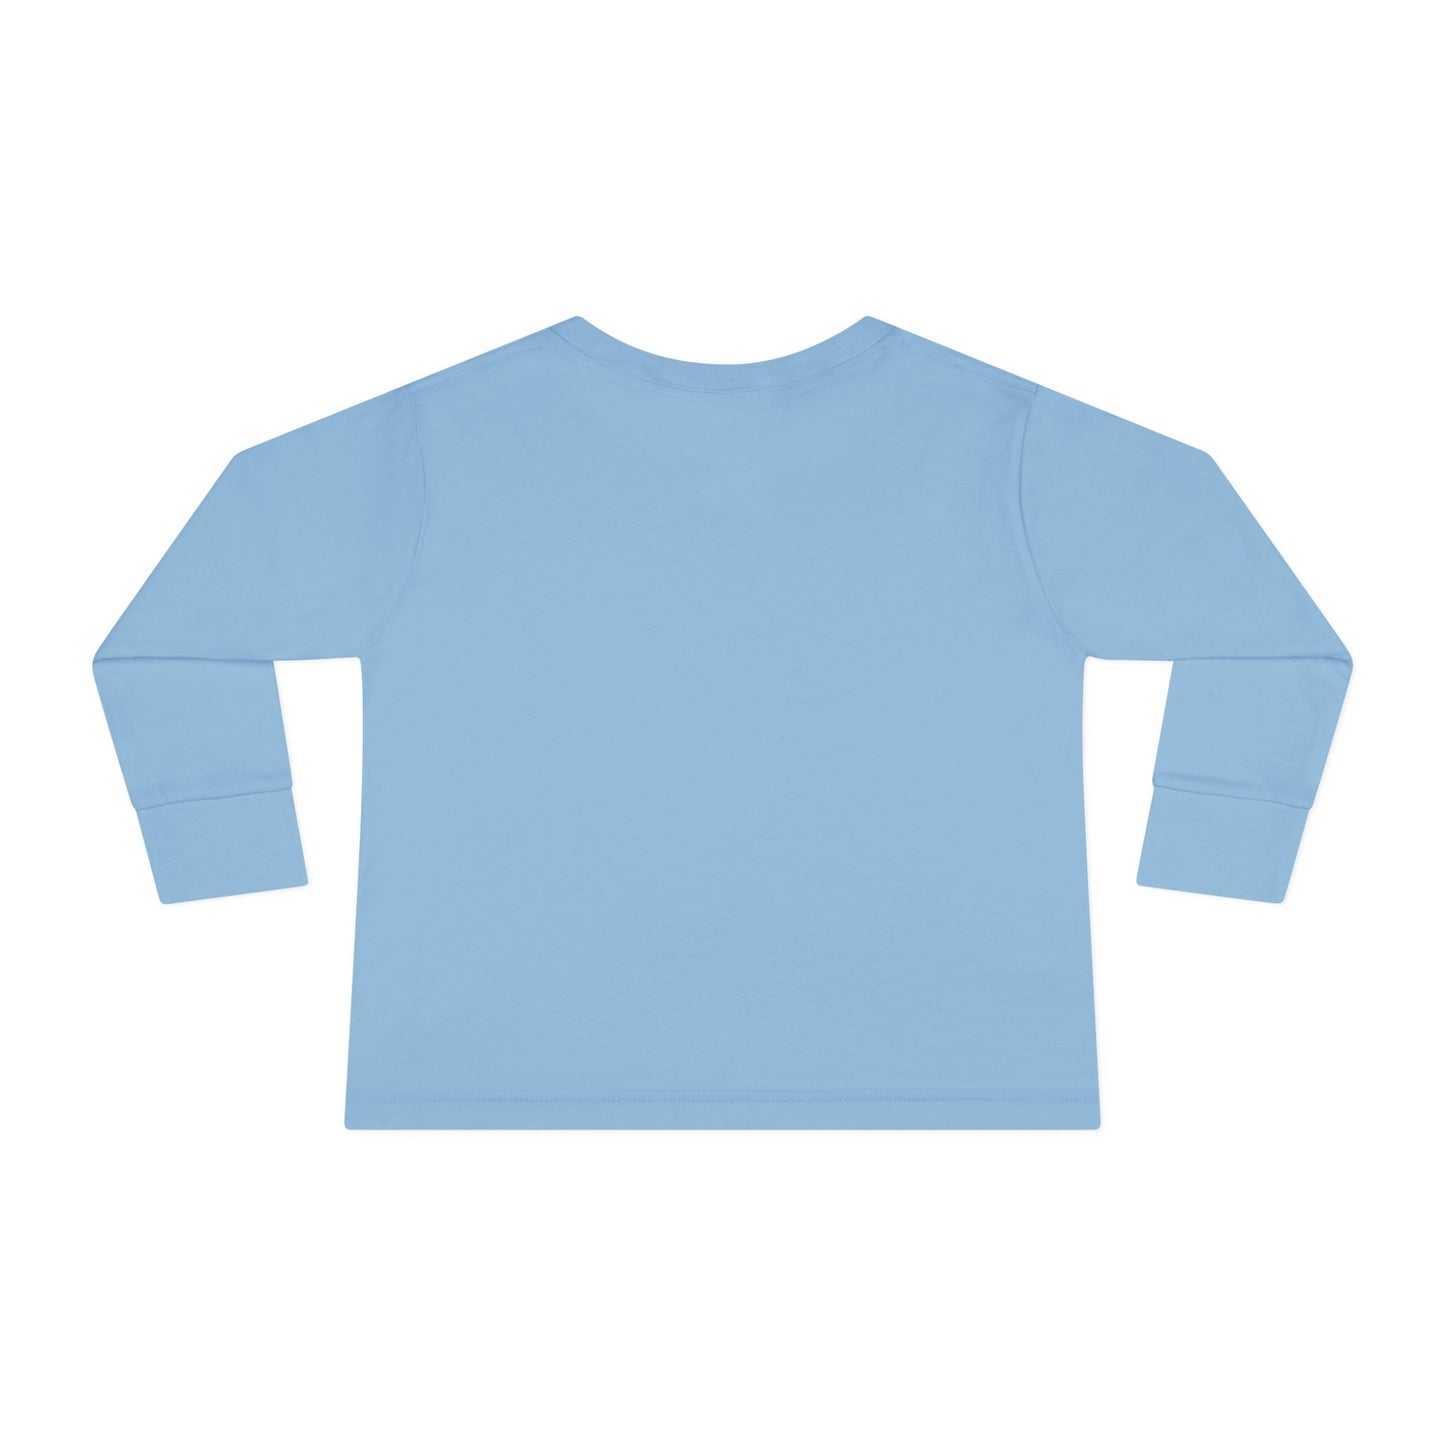 Family - Classic Brooklyn Tech Logo - Toddler Long Sleeve T-Shirt